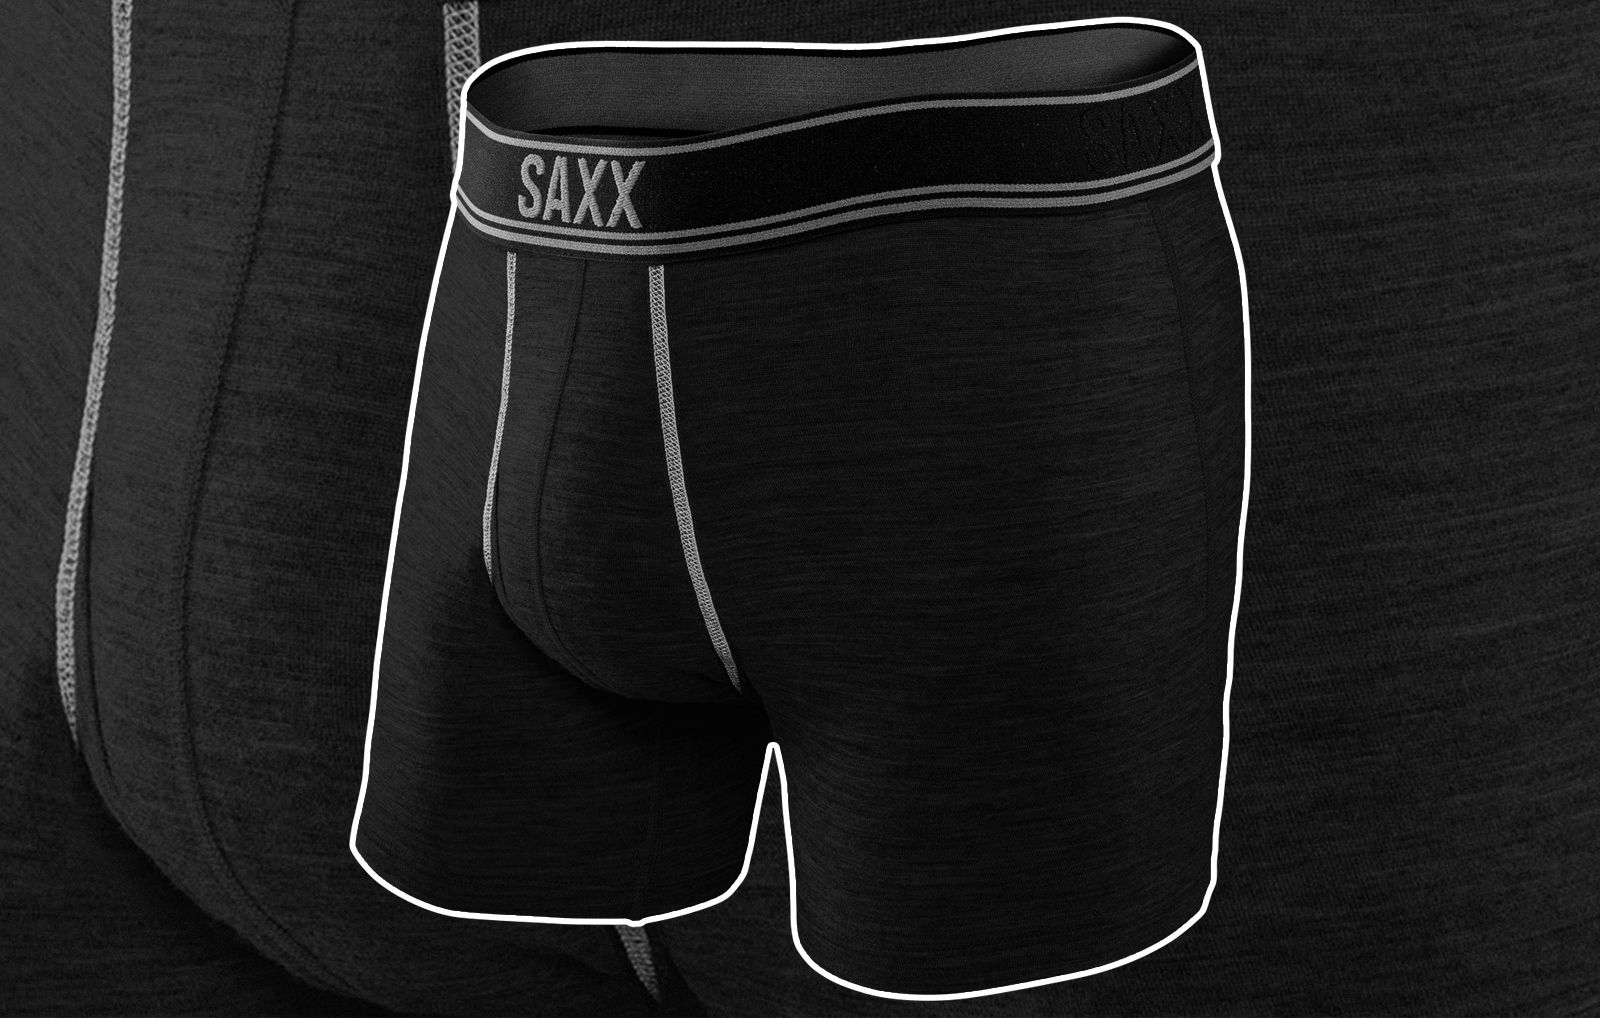 https://hips.hearstapps.com/hmg-prod/images/701/p-2-big-sale-for-saxx-underwears-1511616978.jpg